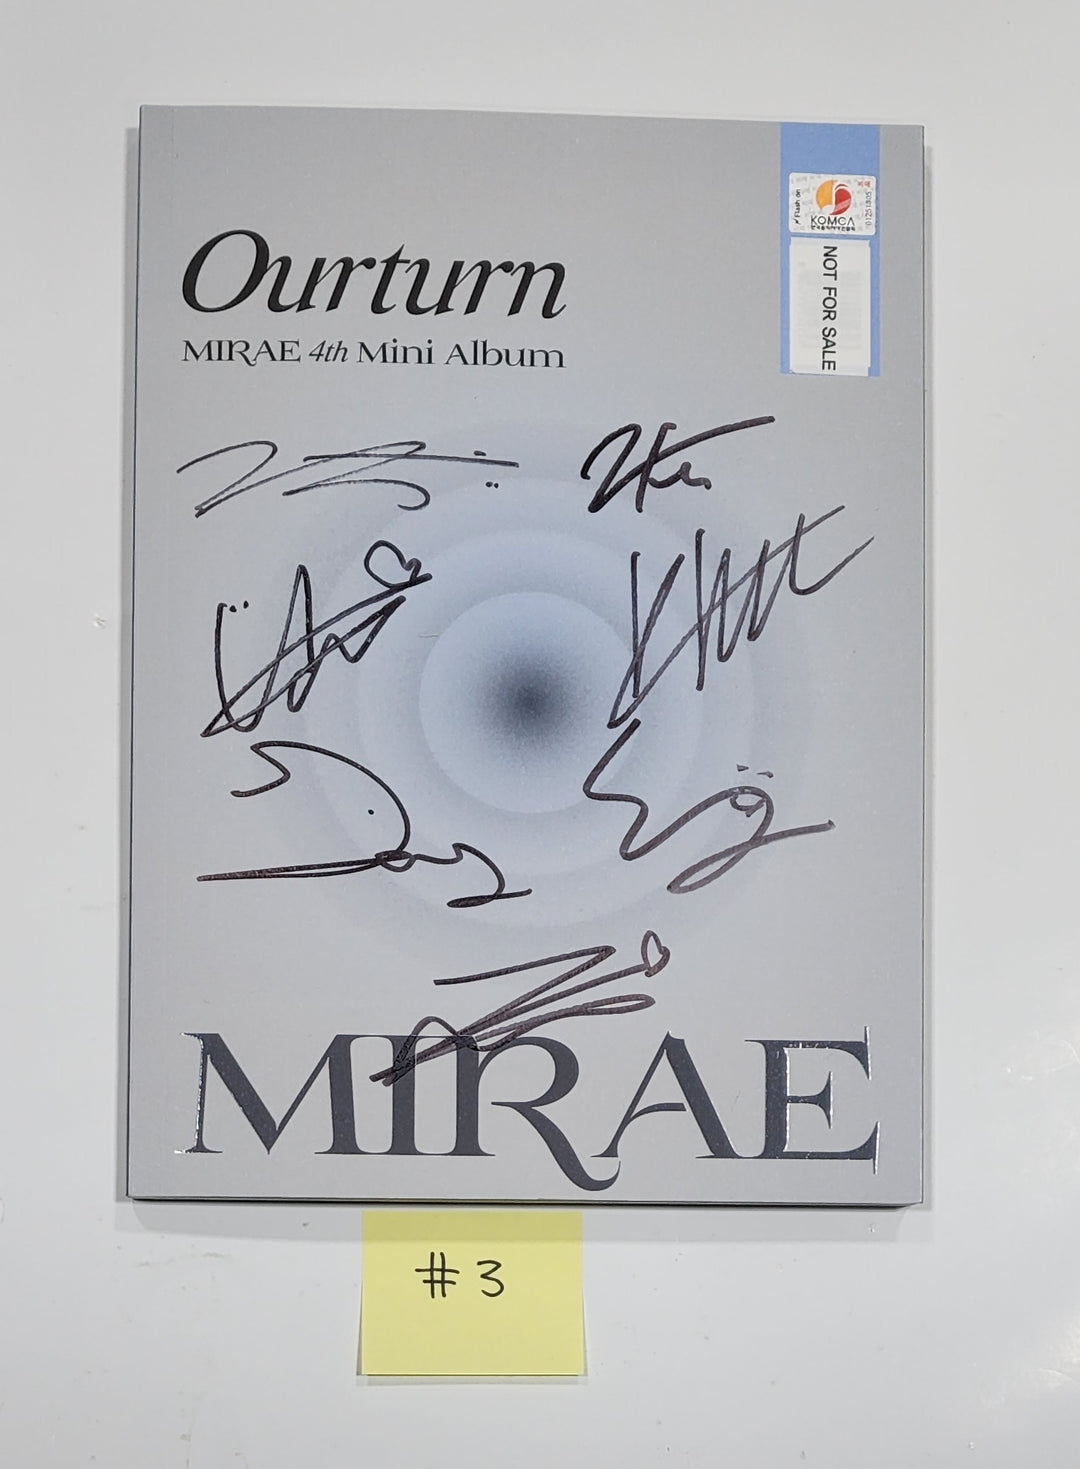 MIRAE "Ourturn " 4th Mini - Hand Autographed(Signed) Promo Album